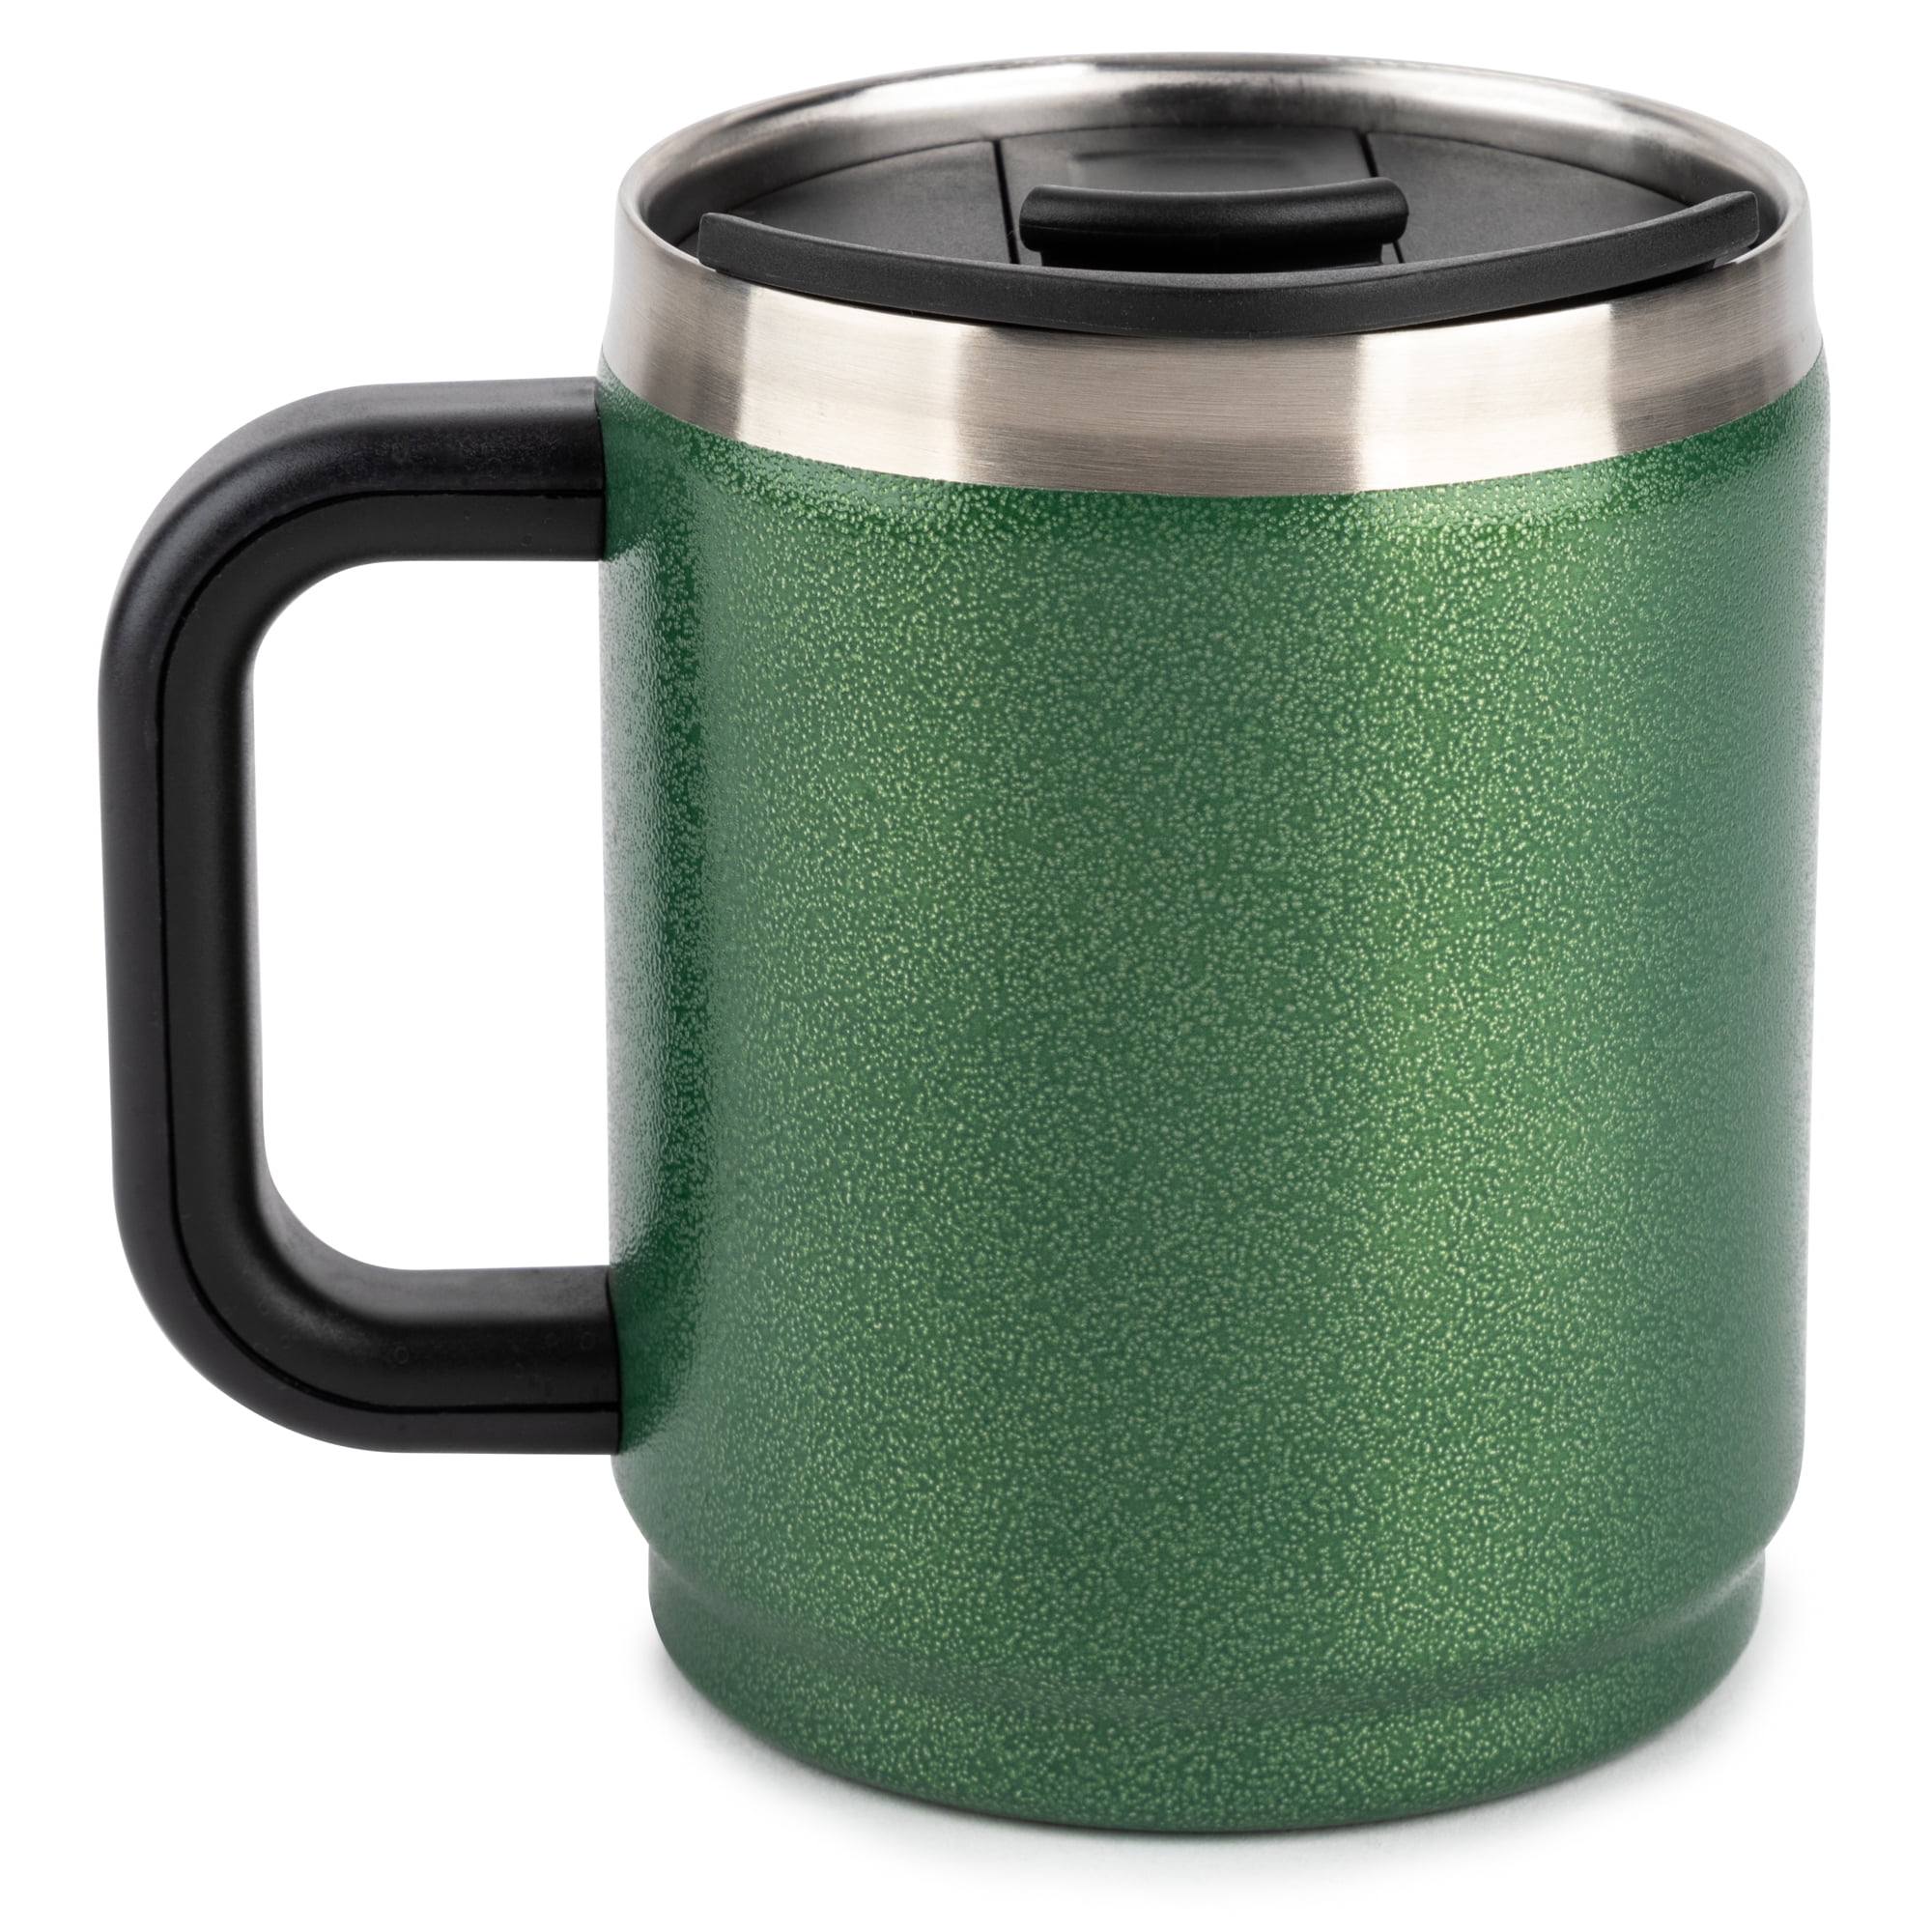 DmofwHi Mid-Century Modern Green Stainless Steel BPA Free Tea Kettle – The  Passport Lifestyle